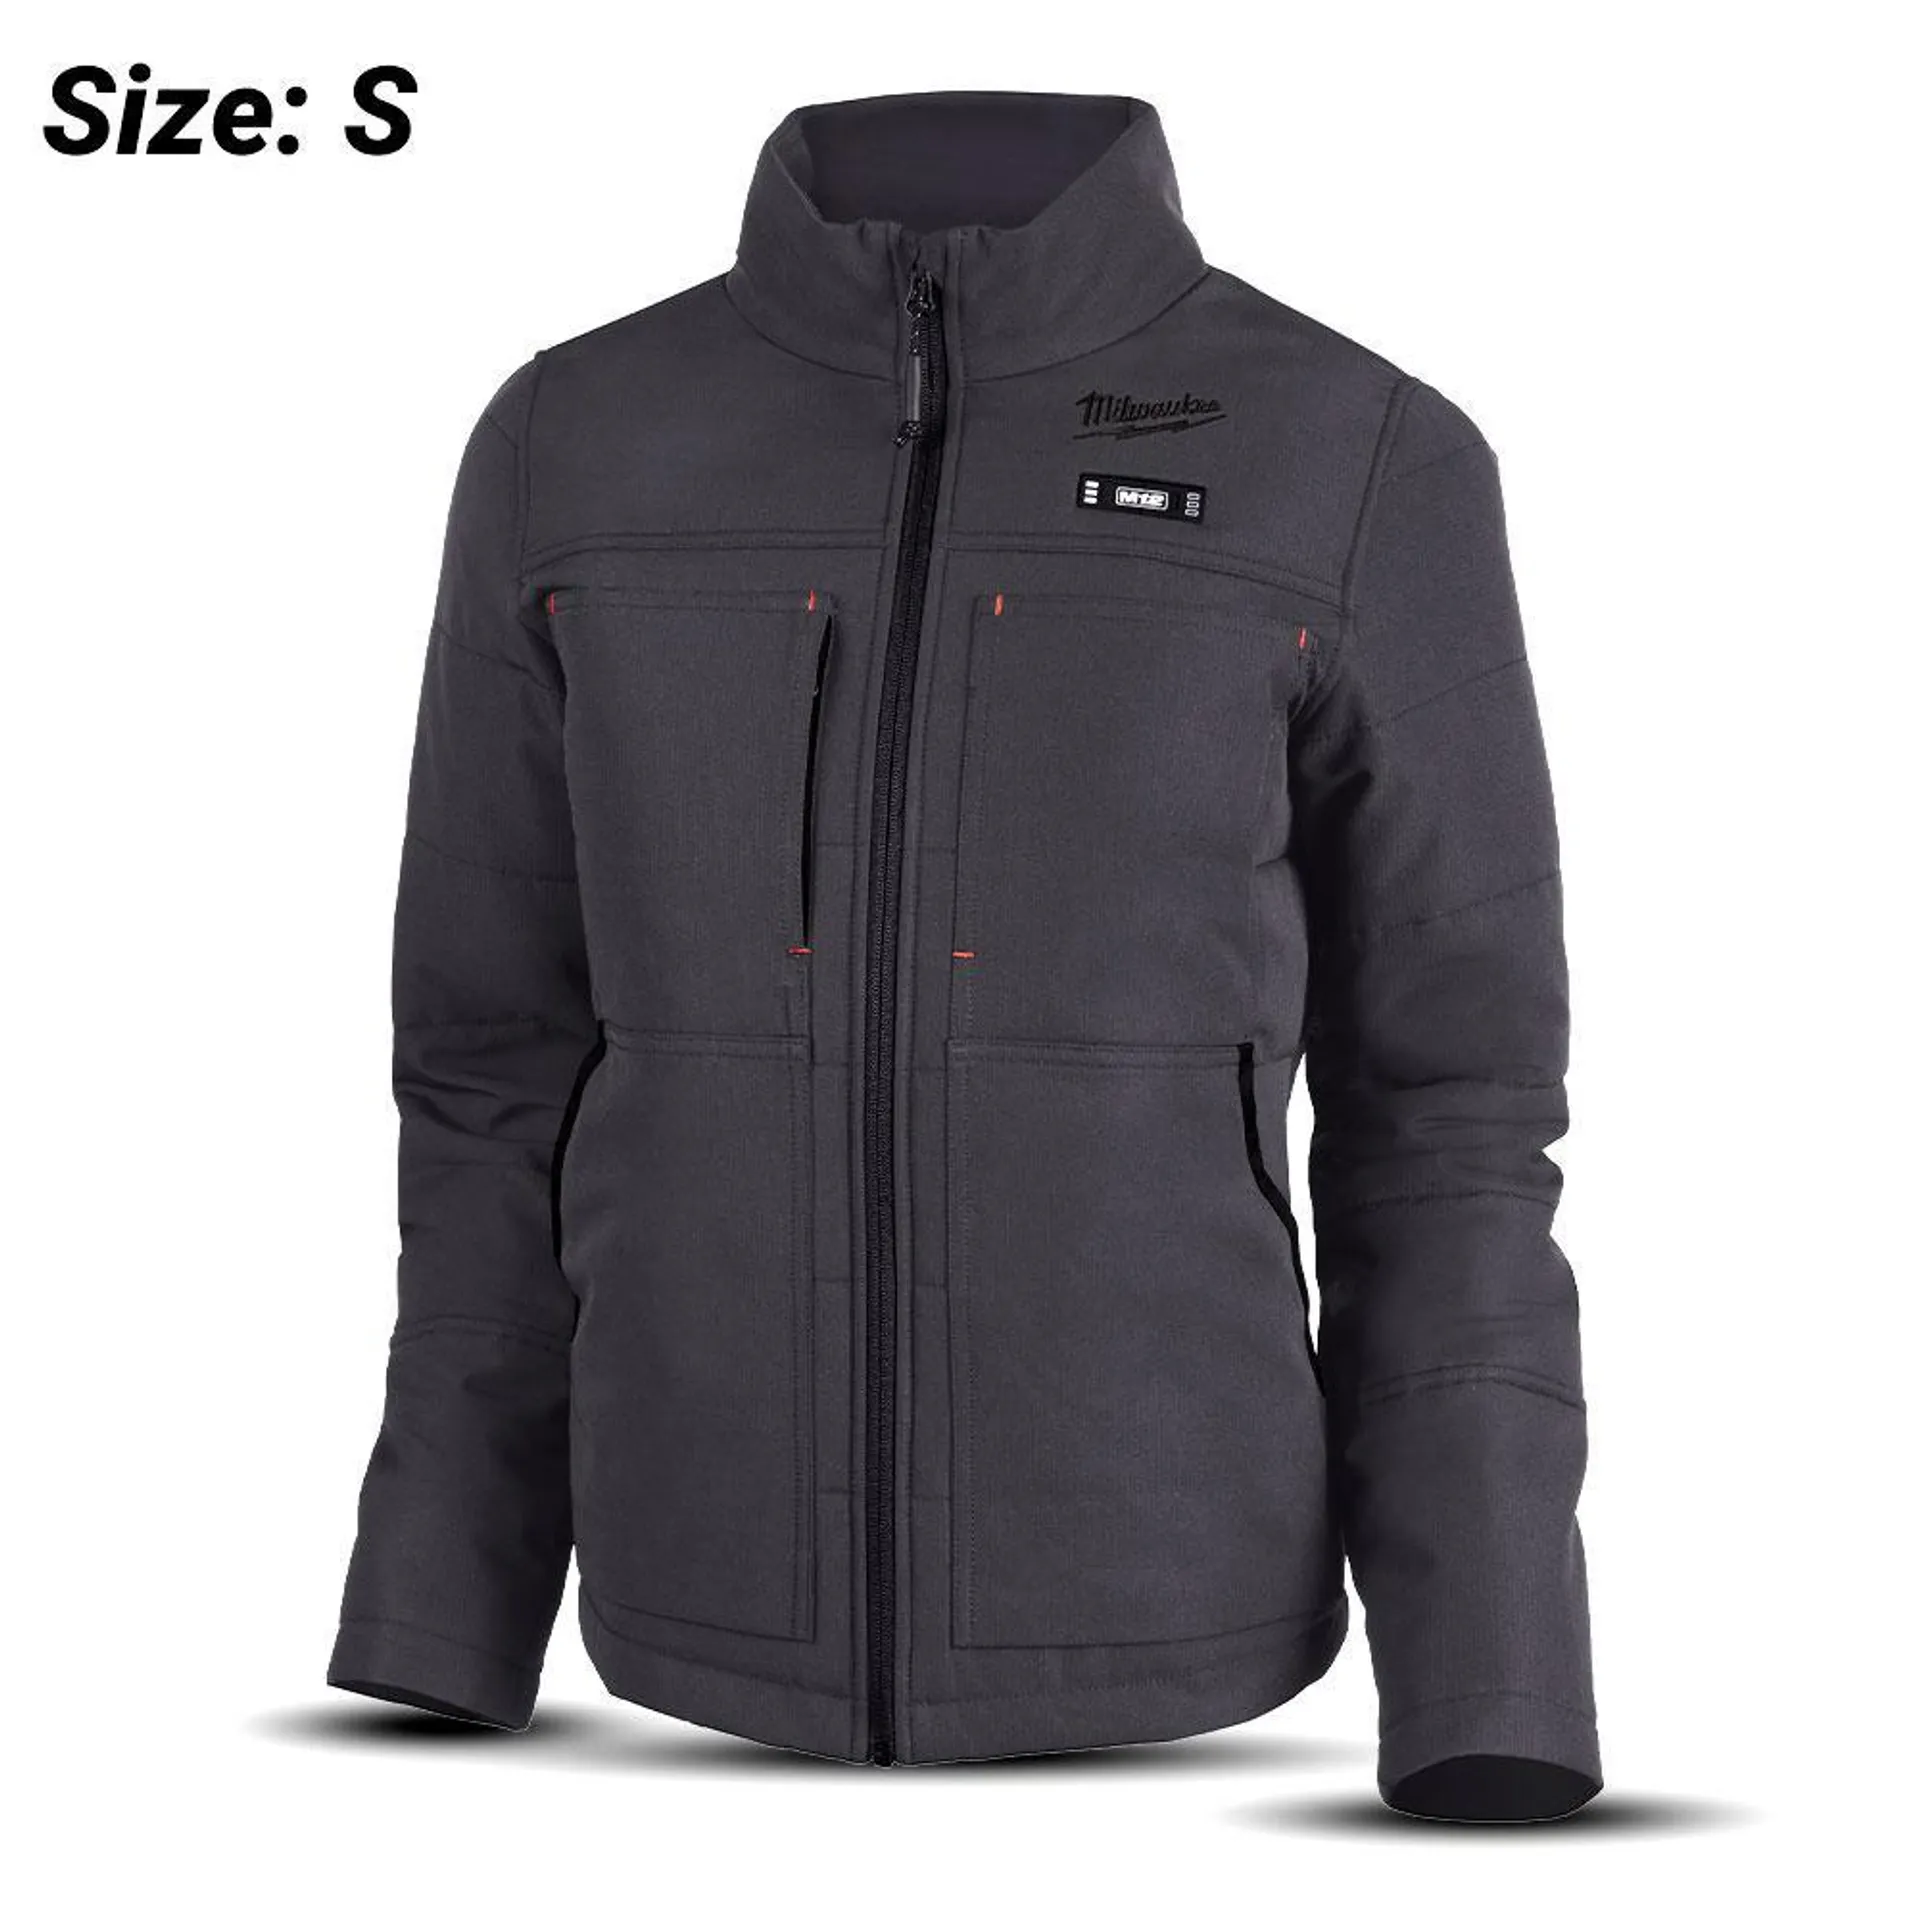 Milwaukee M12HJWGREY30S 12V Li-ion Cordless AXIS™ Grey Heated Women's Jacket (SMALL) - Skin Only